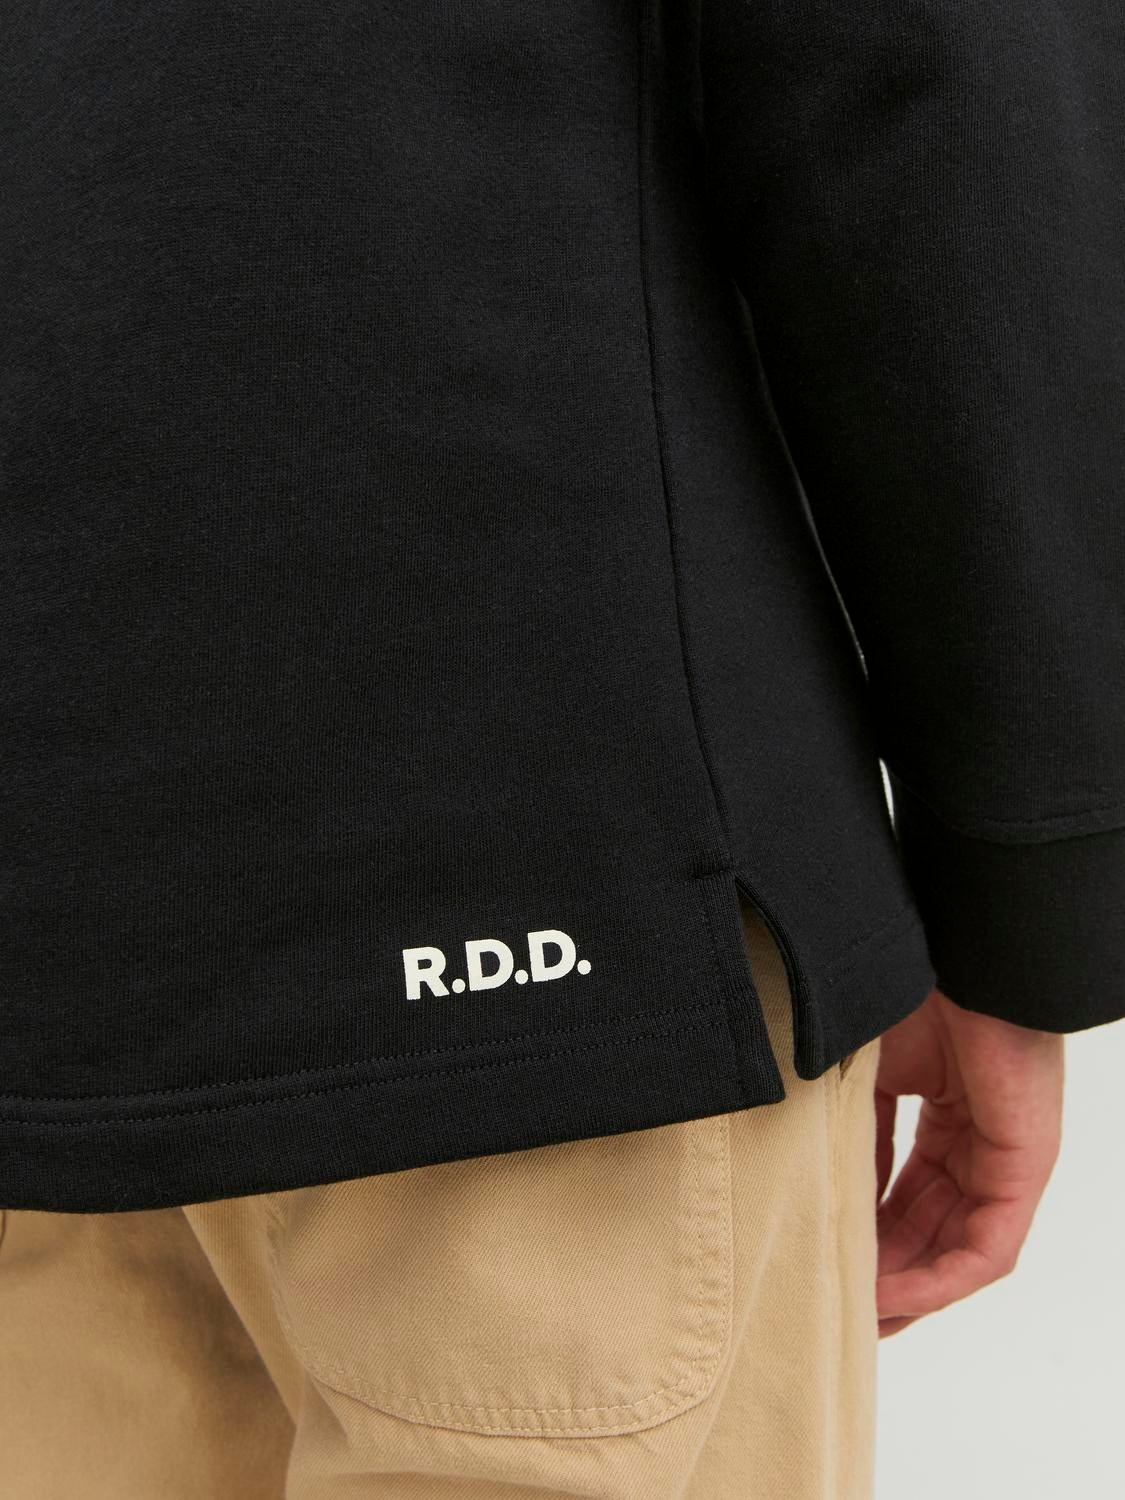 Jack & Jones RDD Printed Crewn Neck Sweatshirt -Black - 12243501